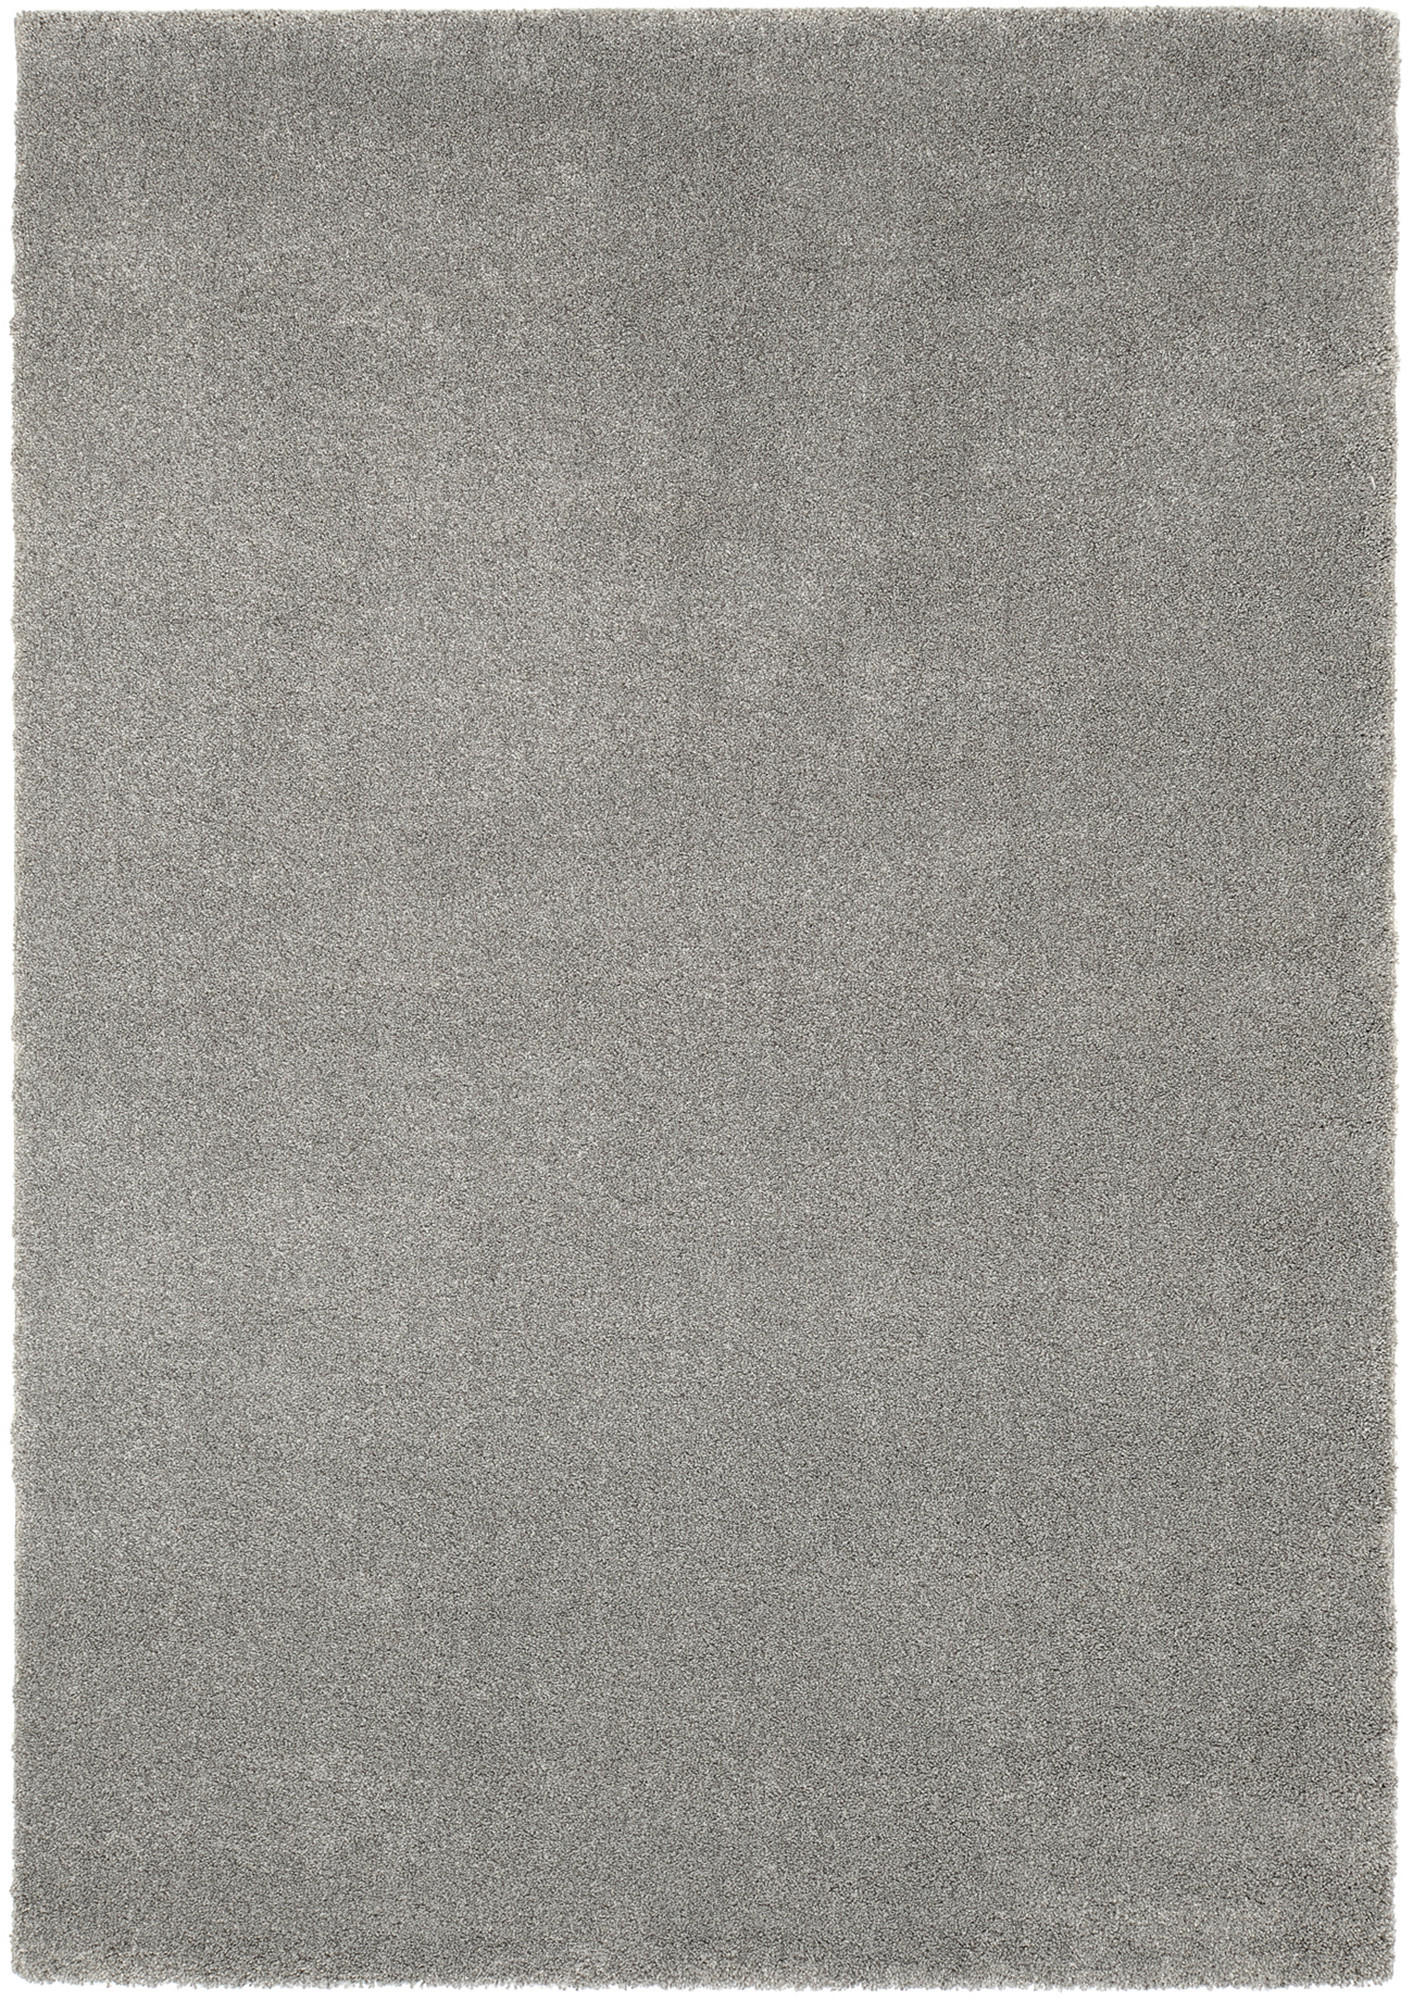 WEBTEPPICH 65/130 cm  - Dunkelgrau, Basics, Textil (65/130cm) - Novel